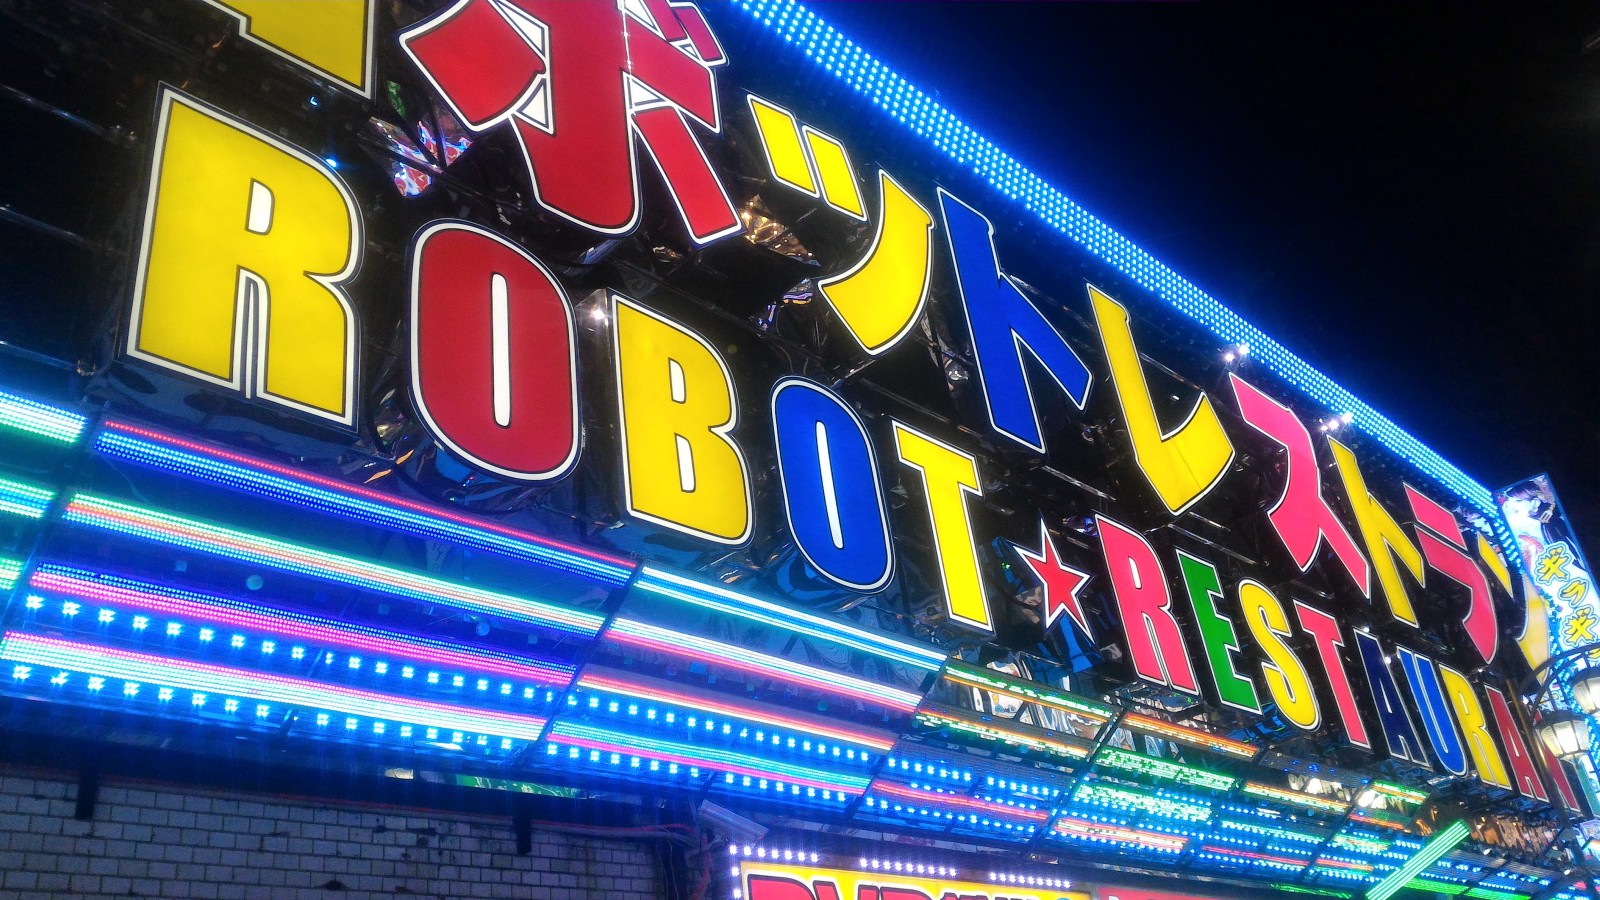 krone Elektriker hjørne Robot Restaurant Shinjuku Tokyo : Get up to 34% Discount Tickets! - Japan  Web Magazine